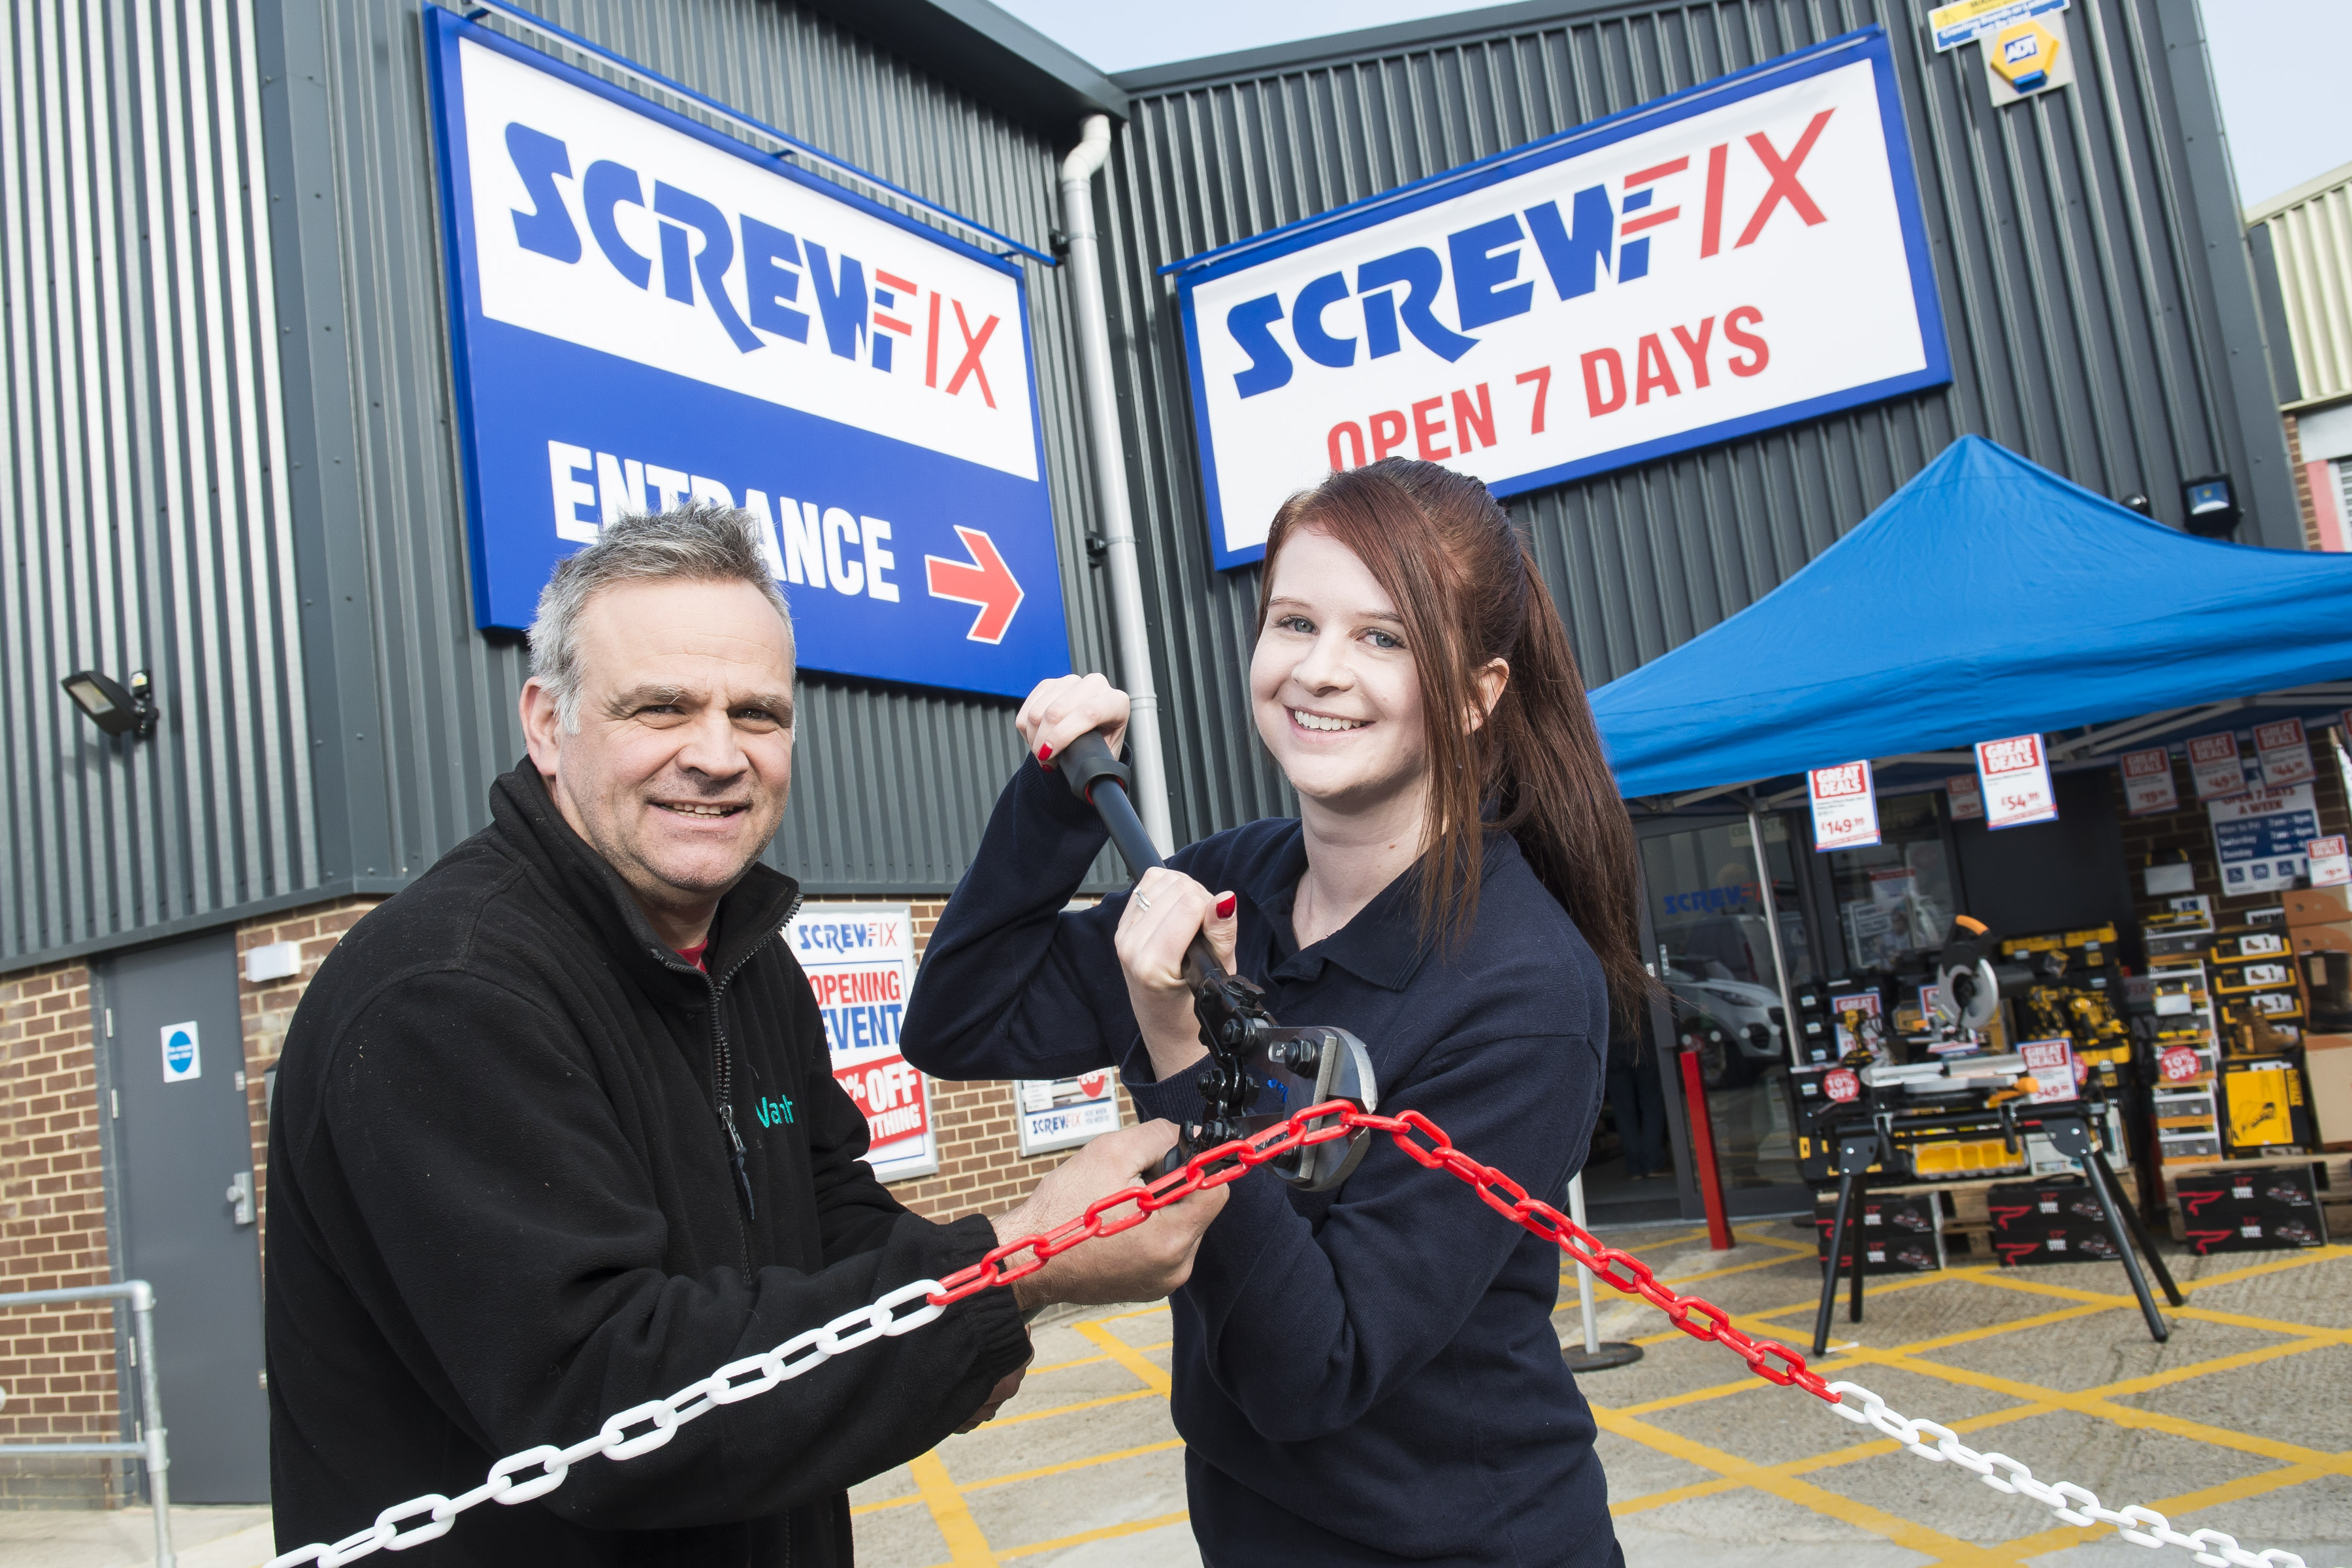 Screwfix opens its doors in Leatherhead